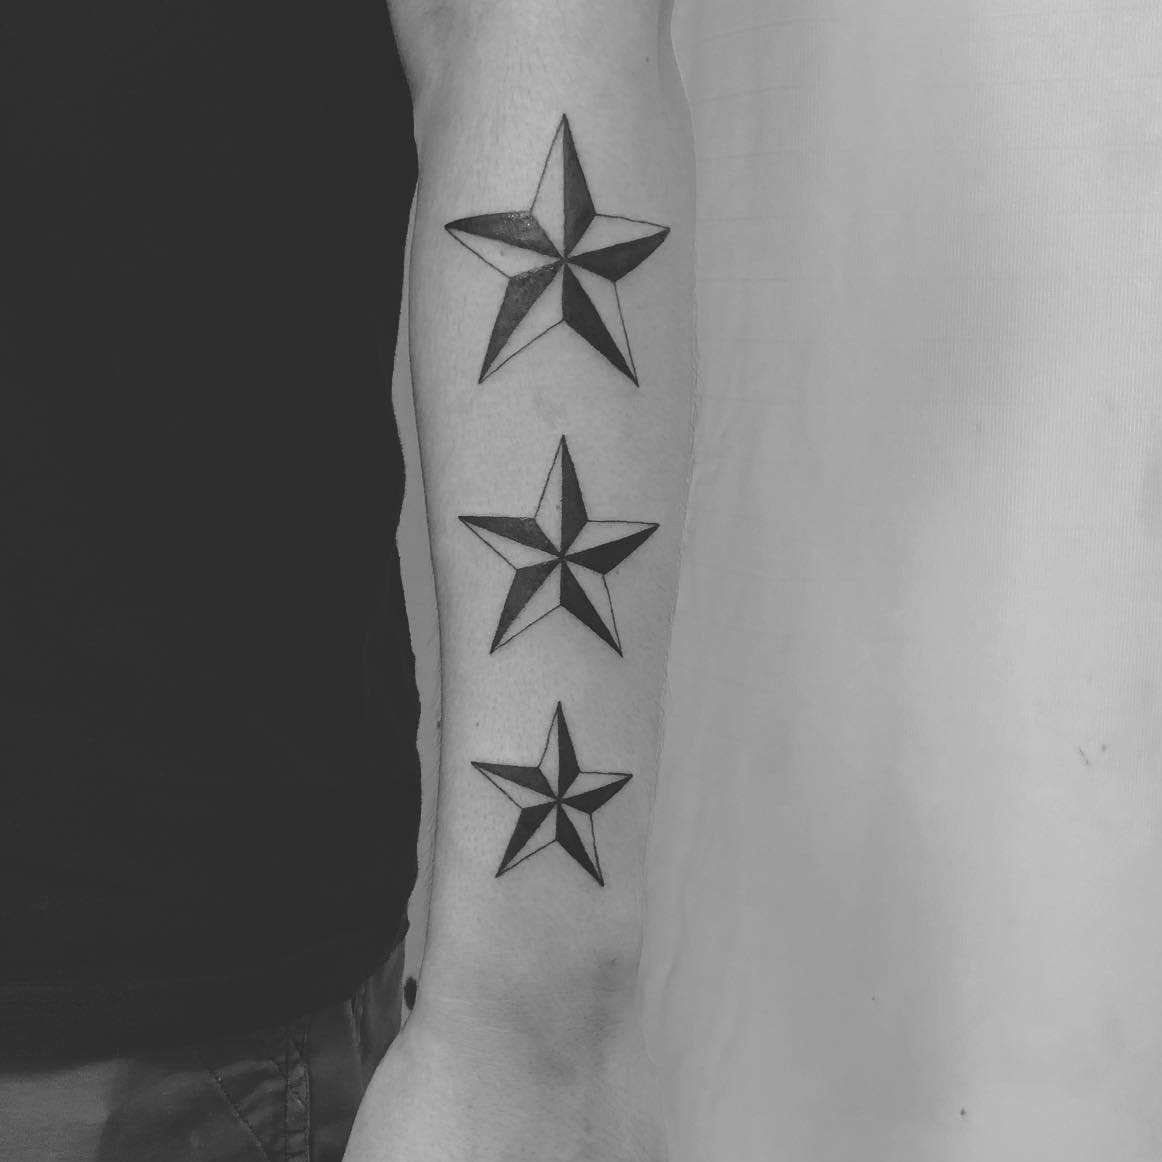 25 Best Star Tattoo Designs for Men and Women